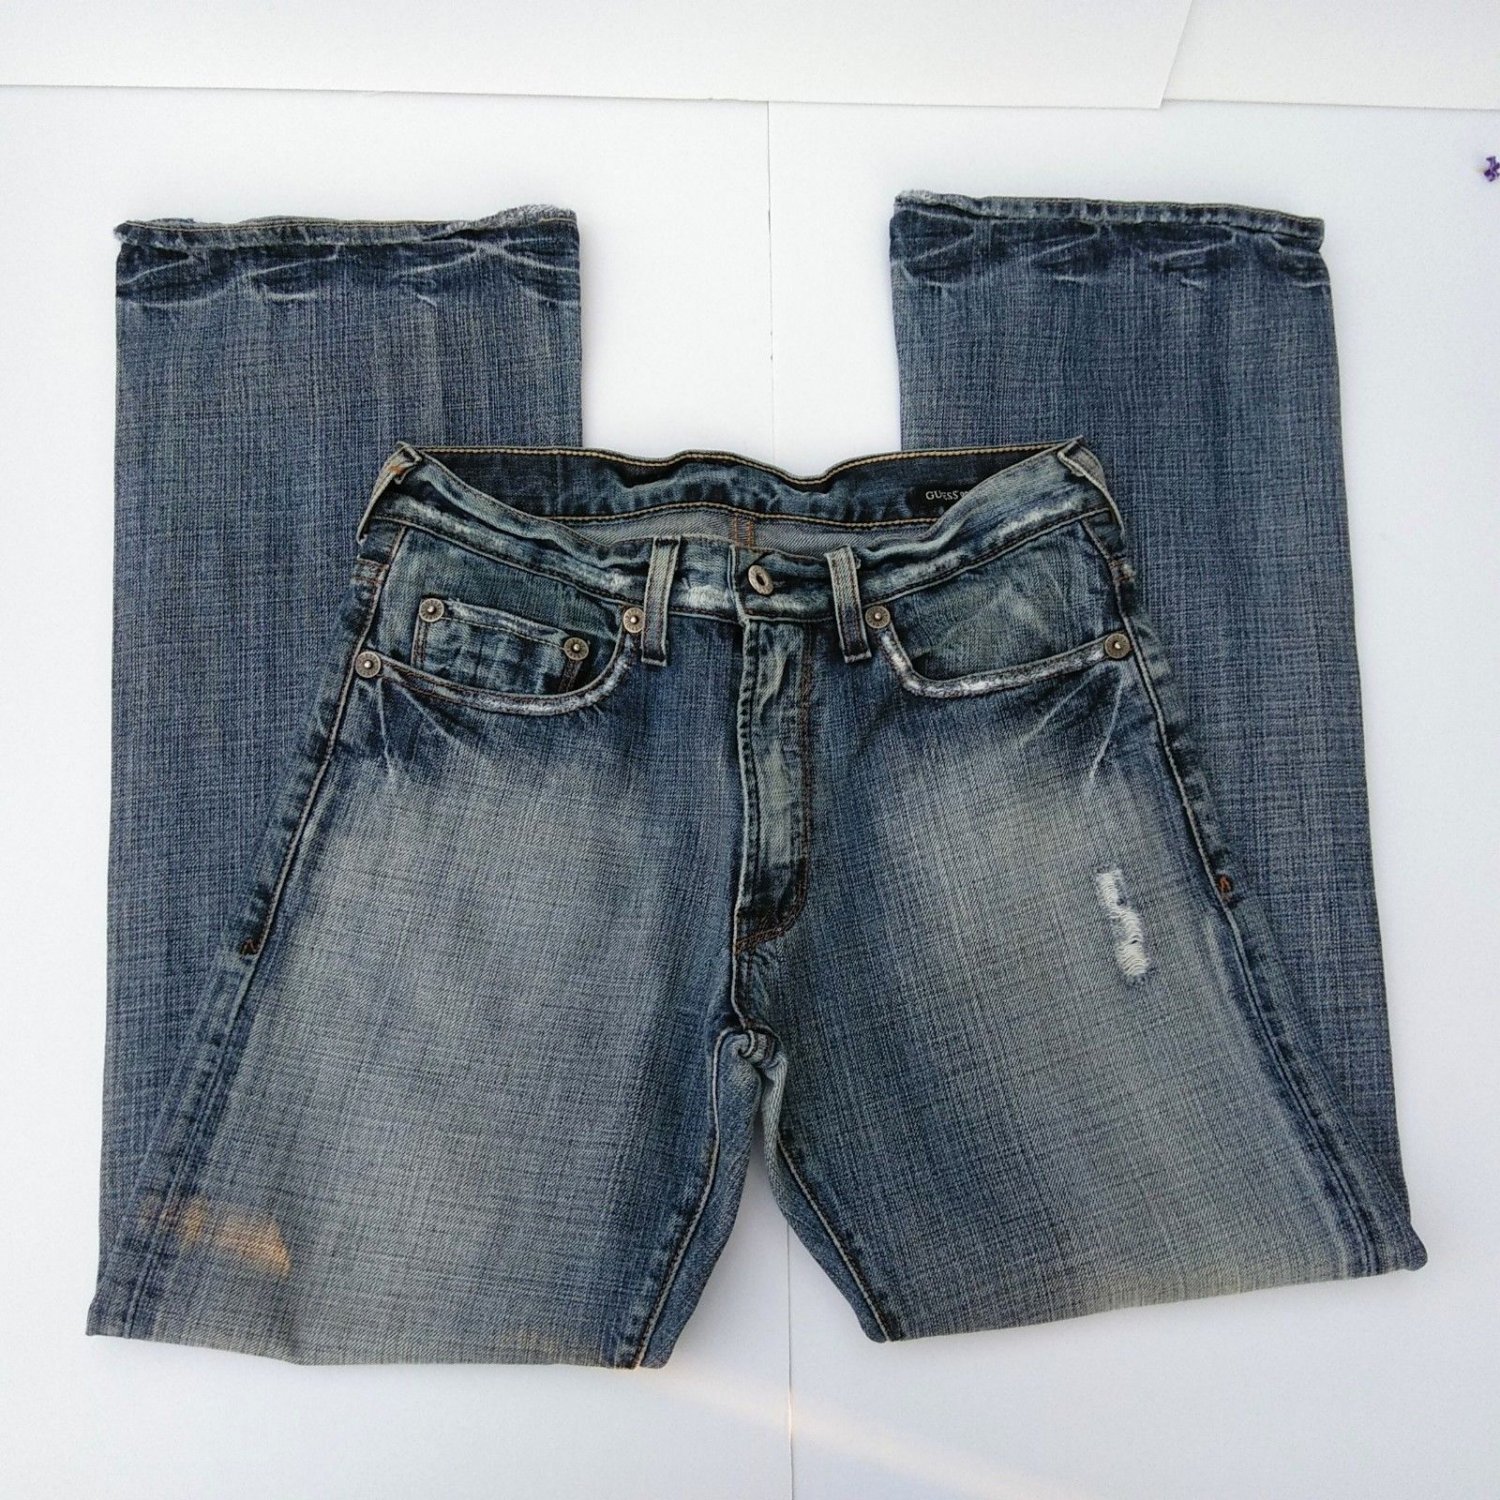 Guess Premium Denim BootCut Men's Jeans Size 30 X 30 Distressed Wash